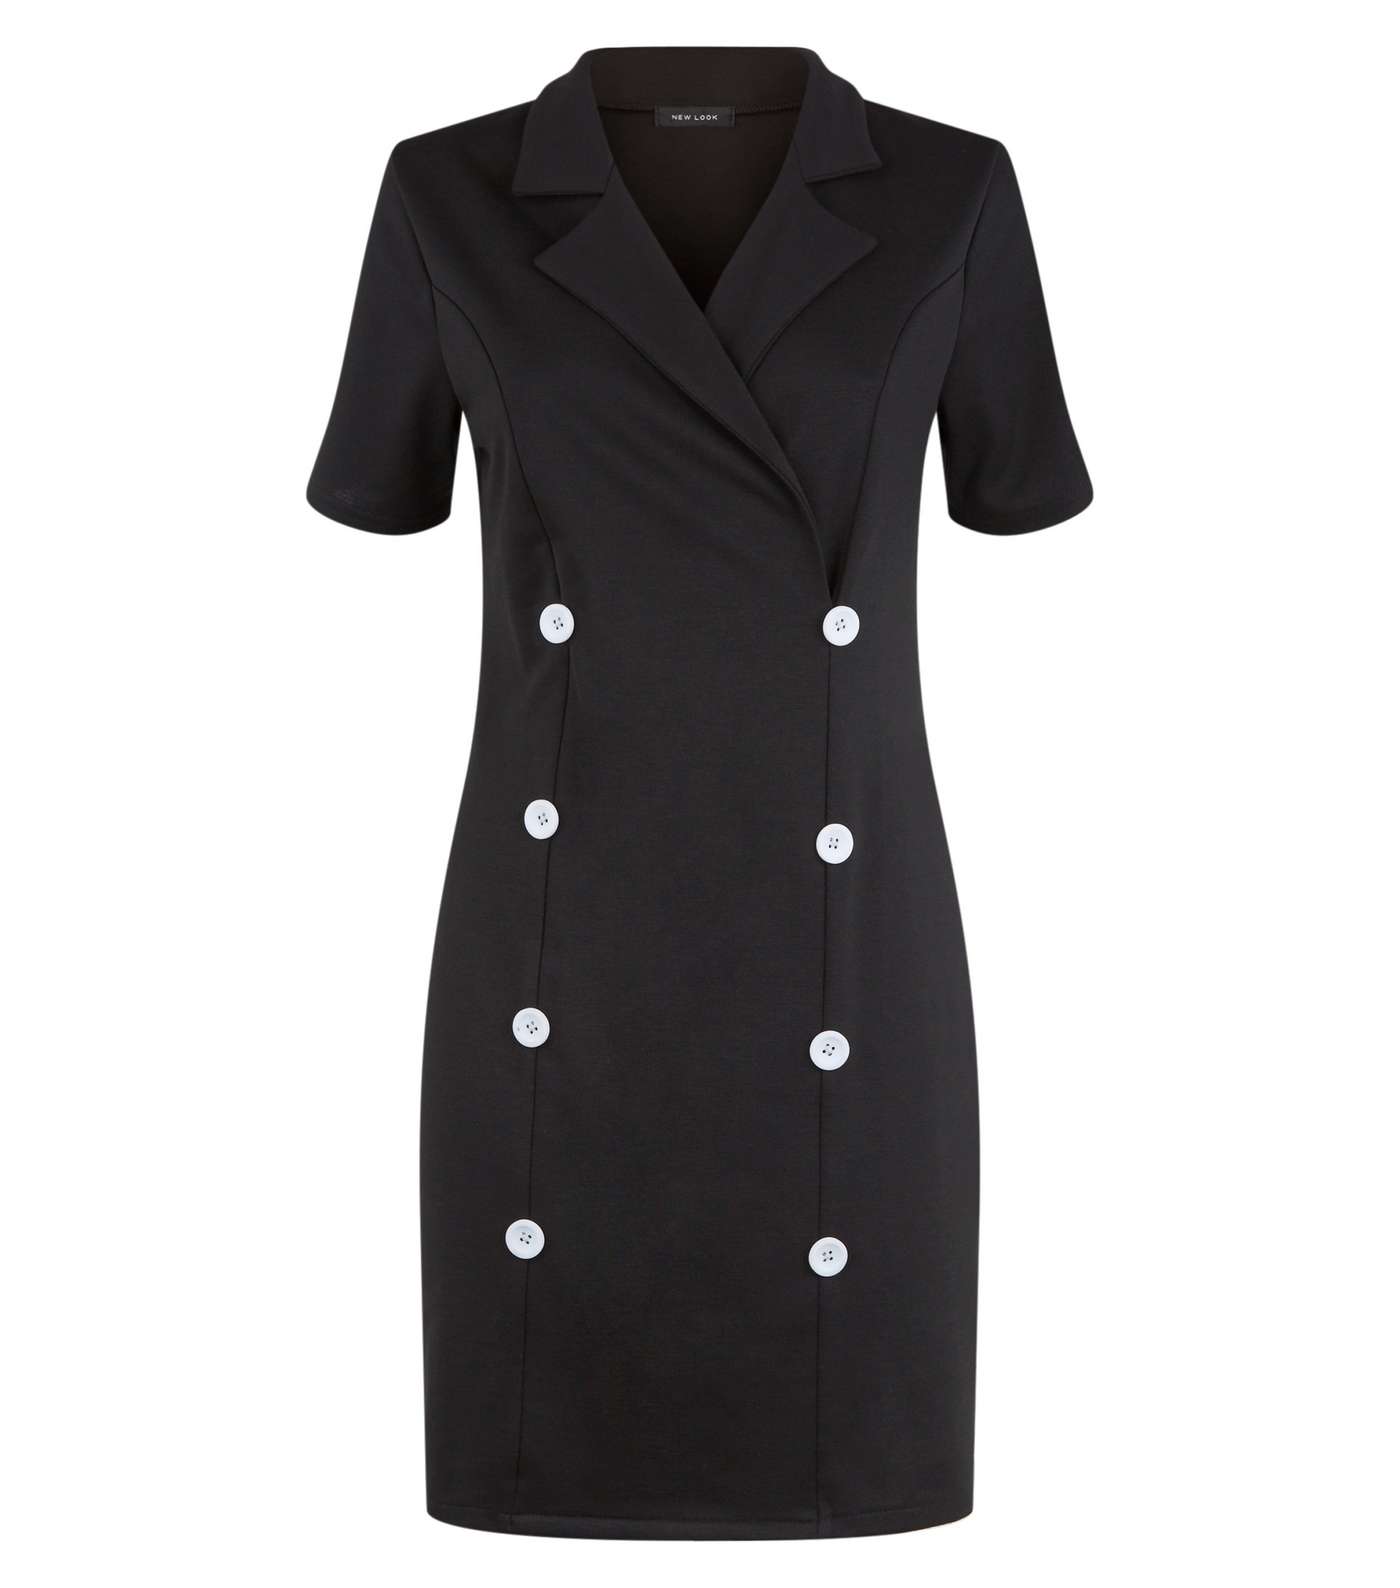 Black Double Breasted Short Sleeve Dress Image 4